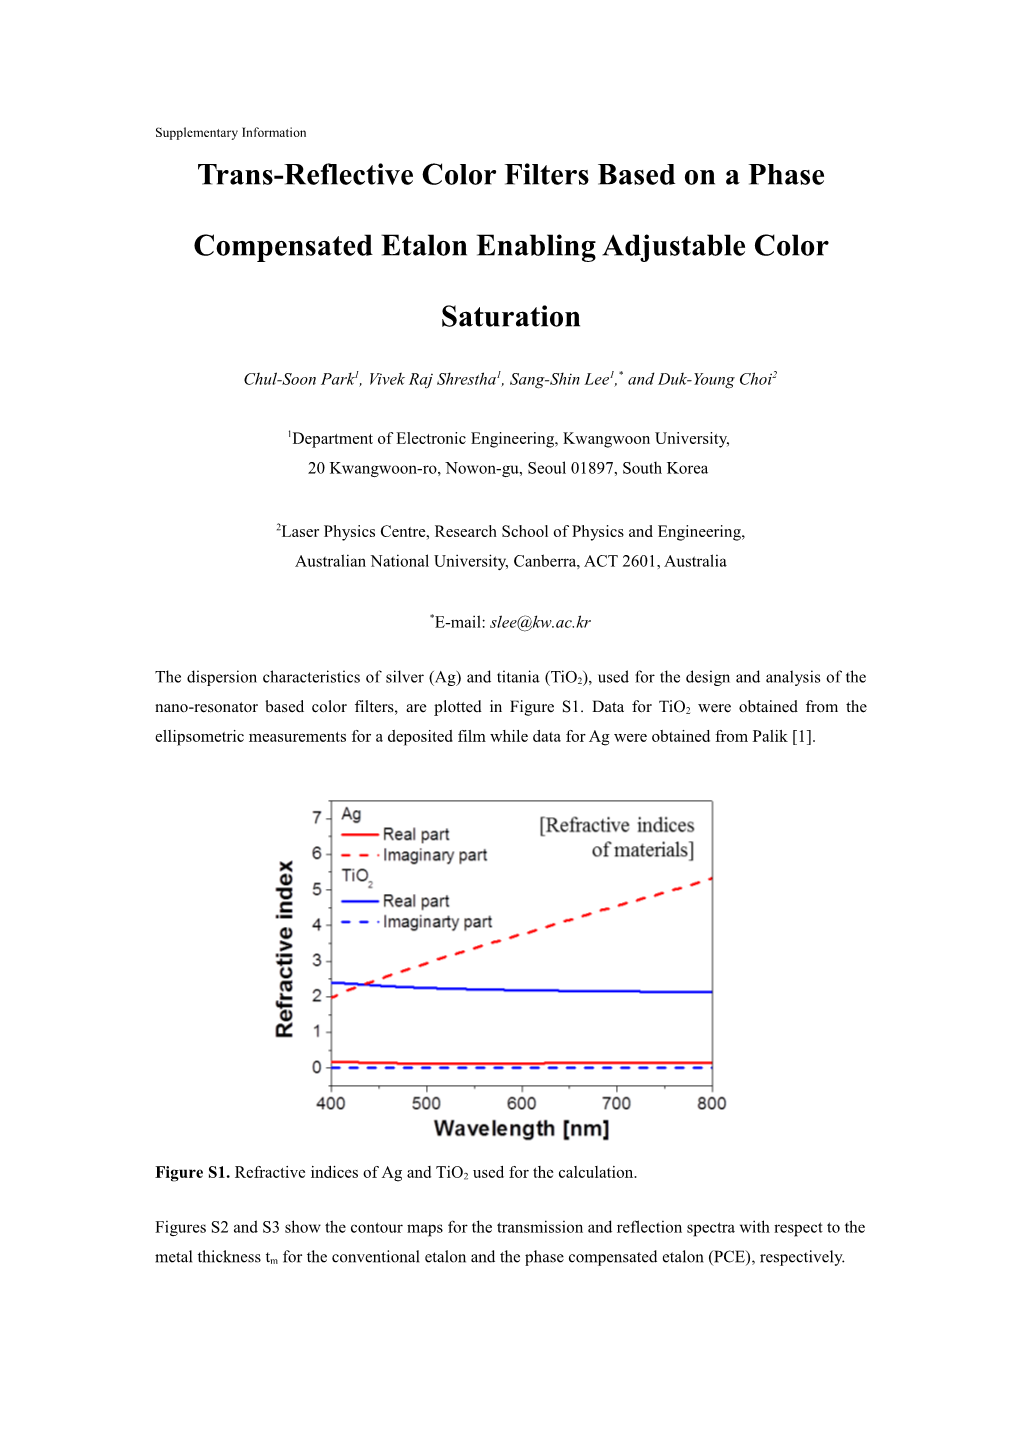 Trans-Reflective Color Filters Based on a Phase Compensated Etalon Enabling Adjustable